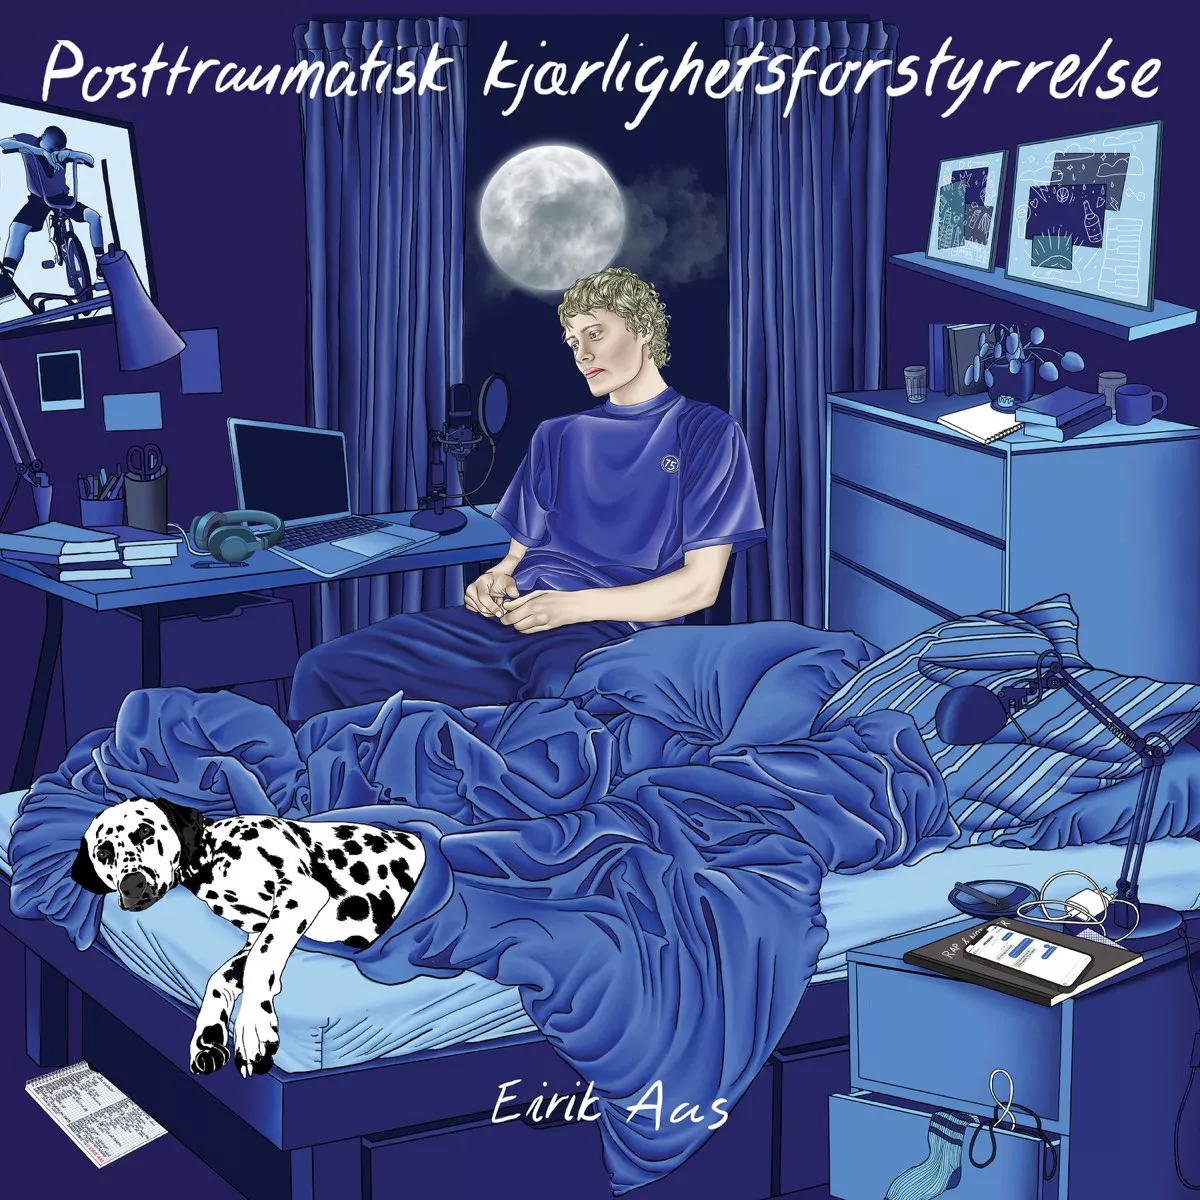 Posttraumarisk kjærlighetsforstyrrelse - Eirik Aas